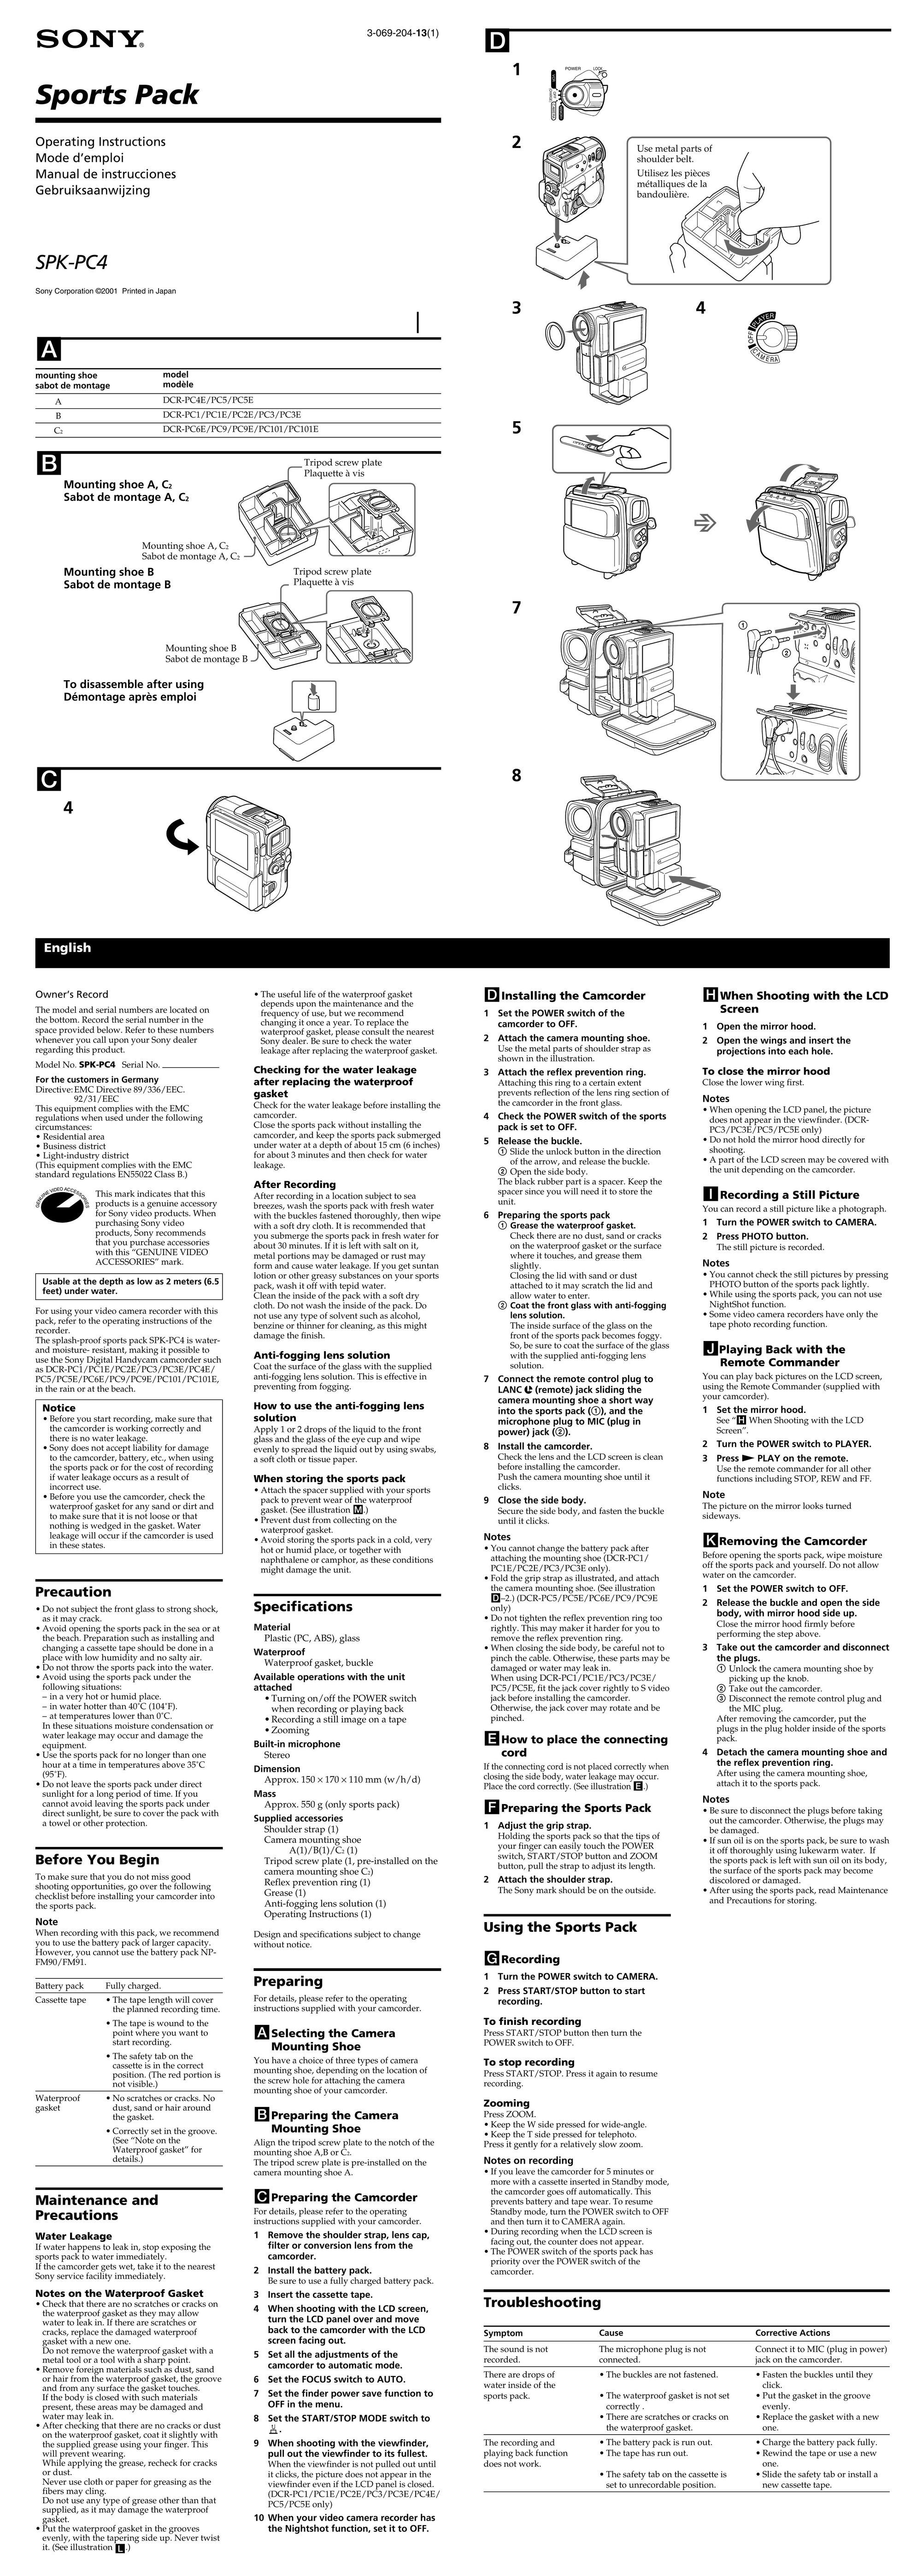 Sony SPK-PC4 Carrying Case User Manual